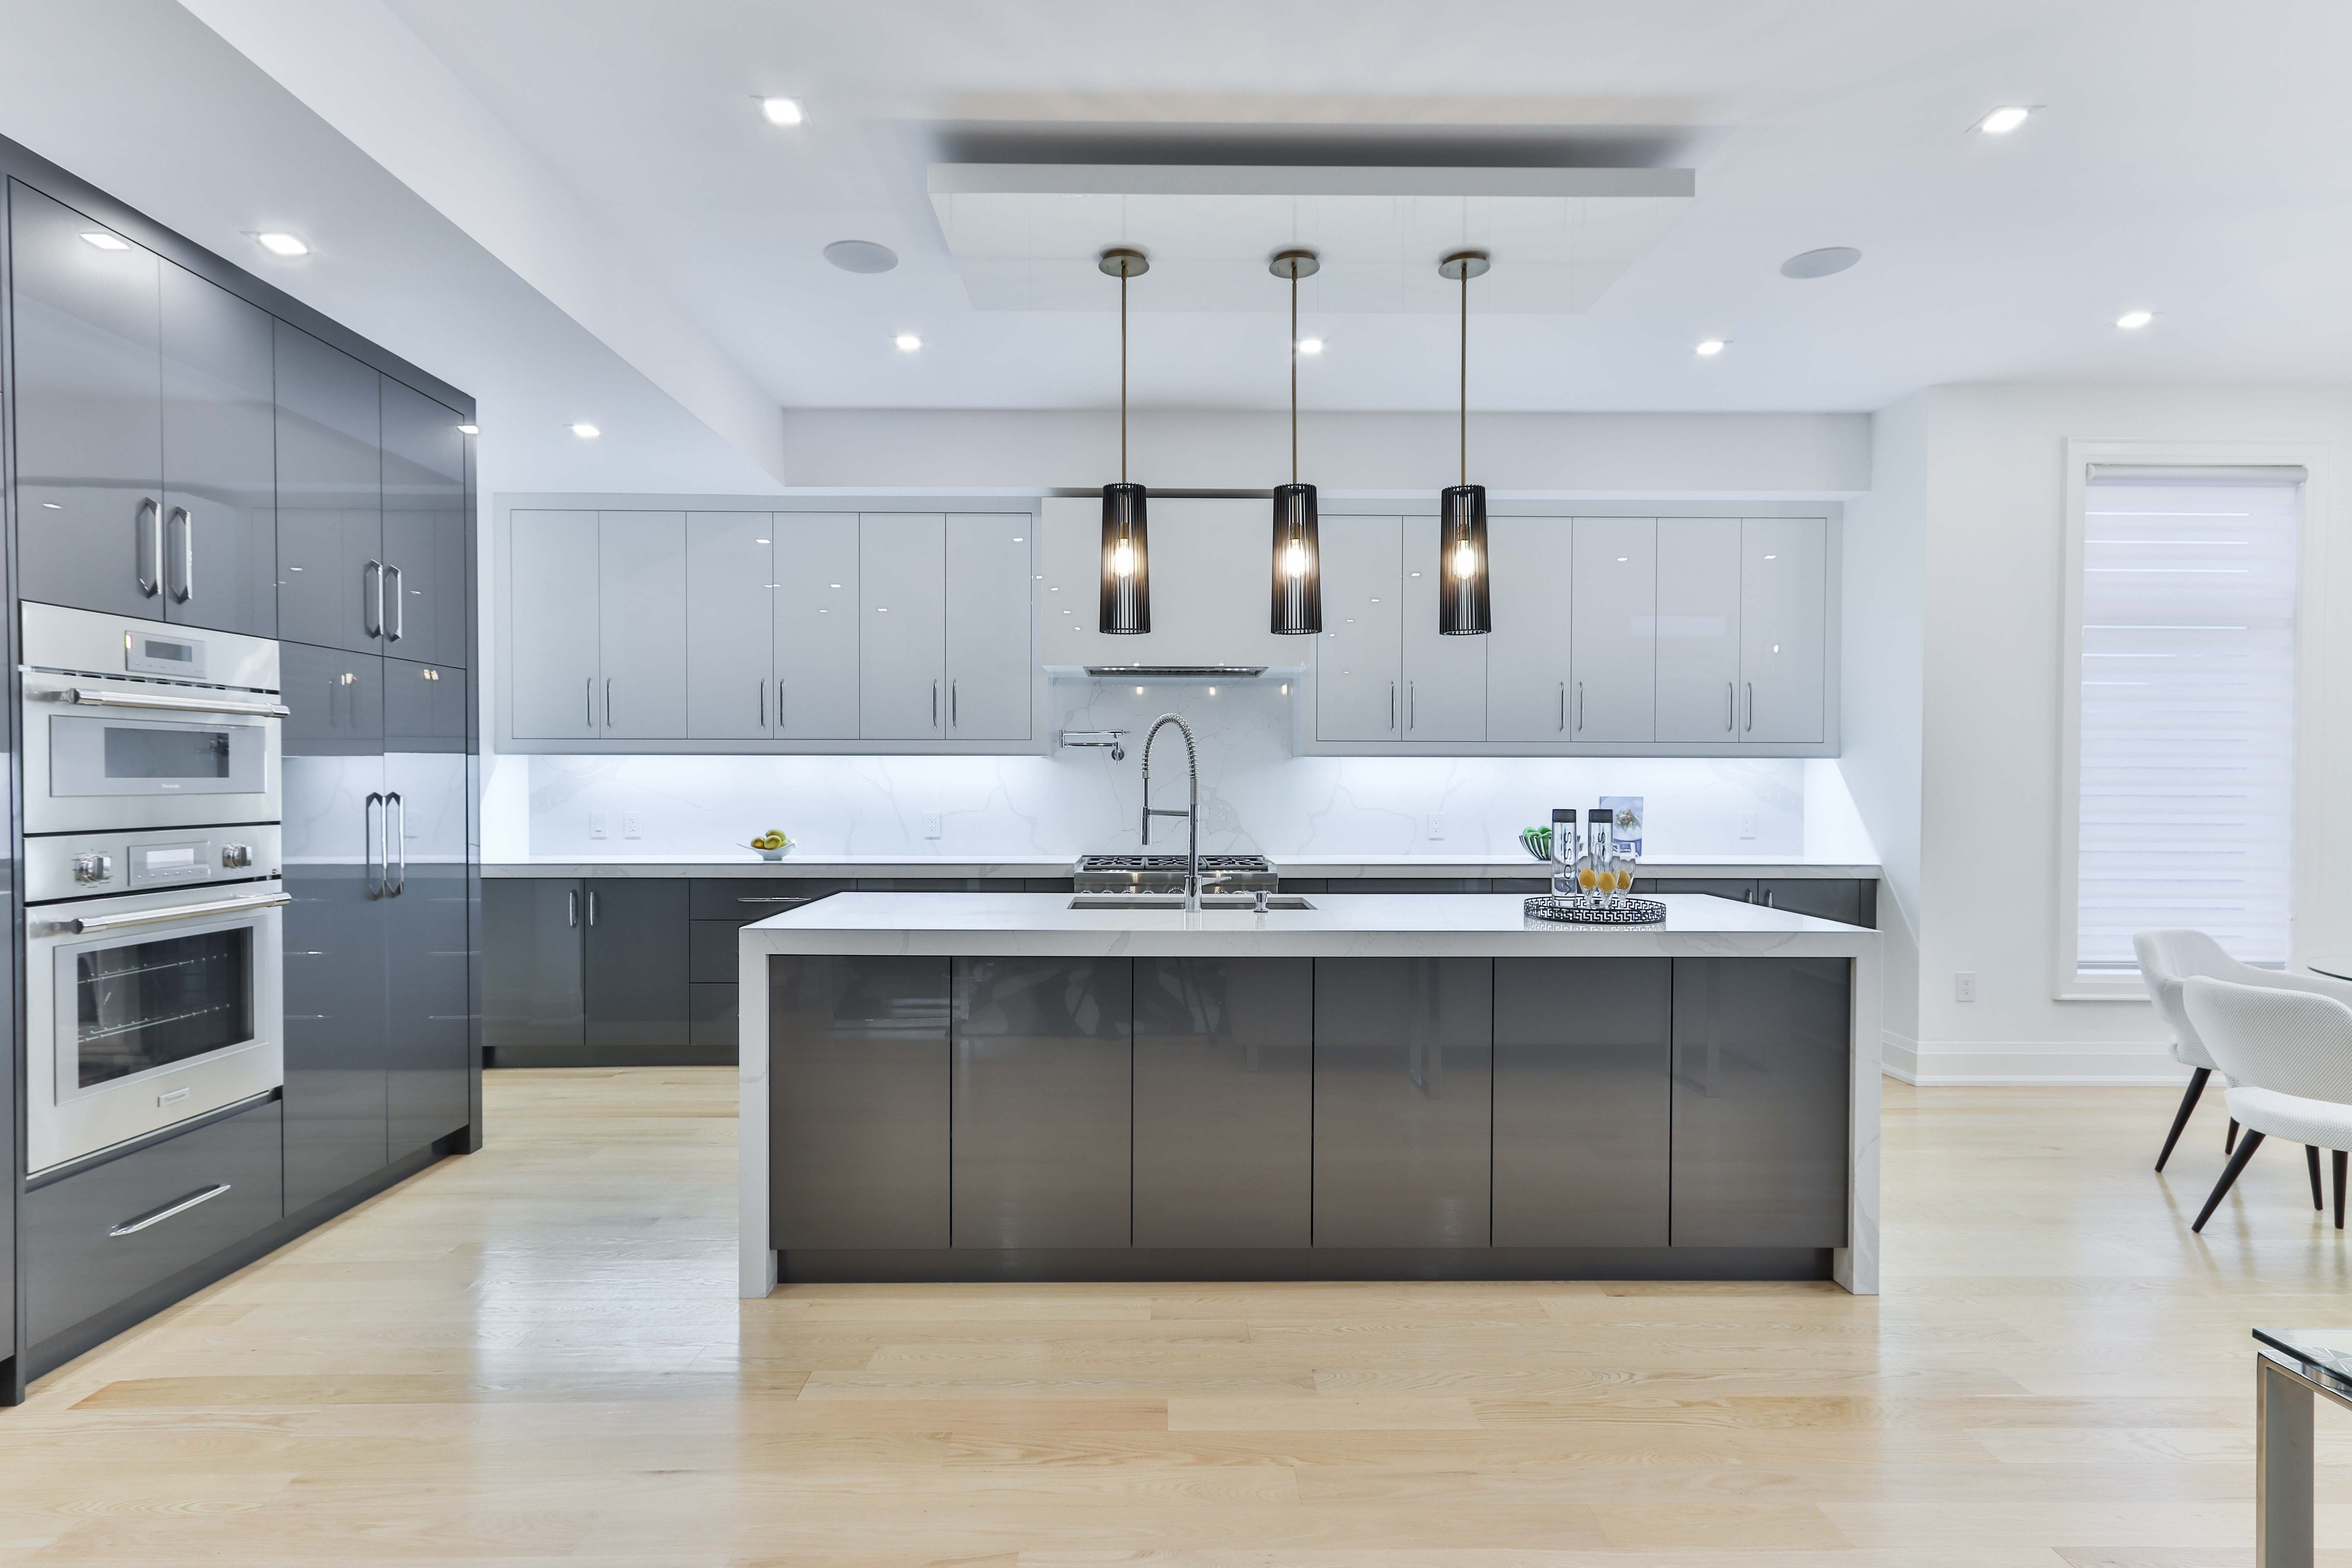 This glam black and white kitchen balances family practicality